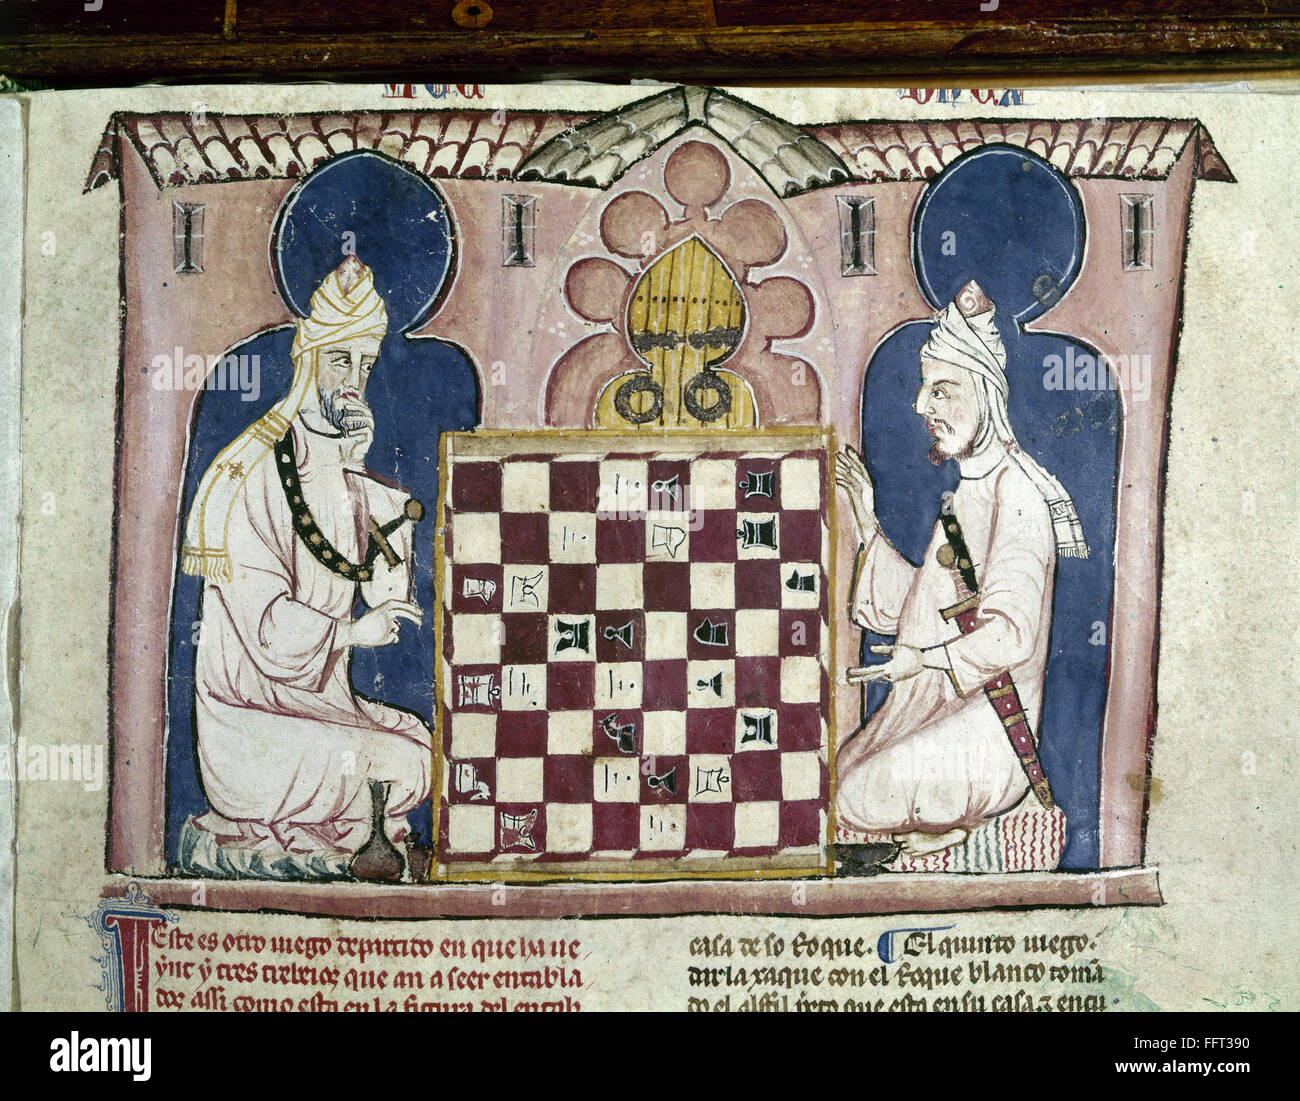 Шахматы в древности. Древние индийские шахматы чатуранга. Персидский шатрандж шахматы. Шатрандж (древние индийские шахматы). Шатрандж (древние индийские шахматы) фигуры.